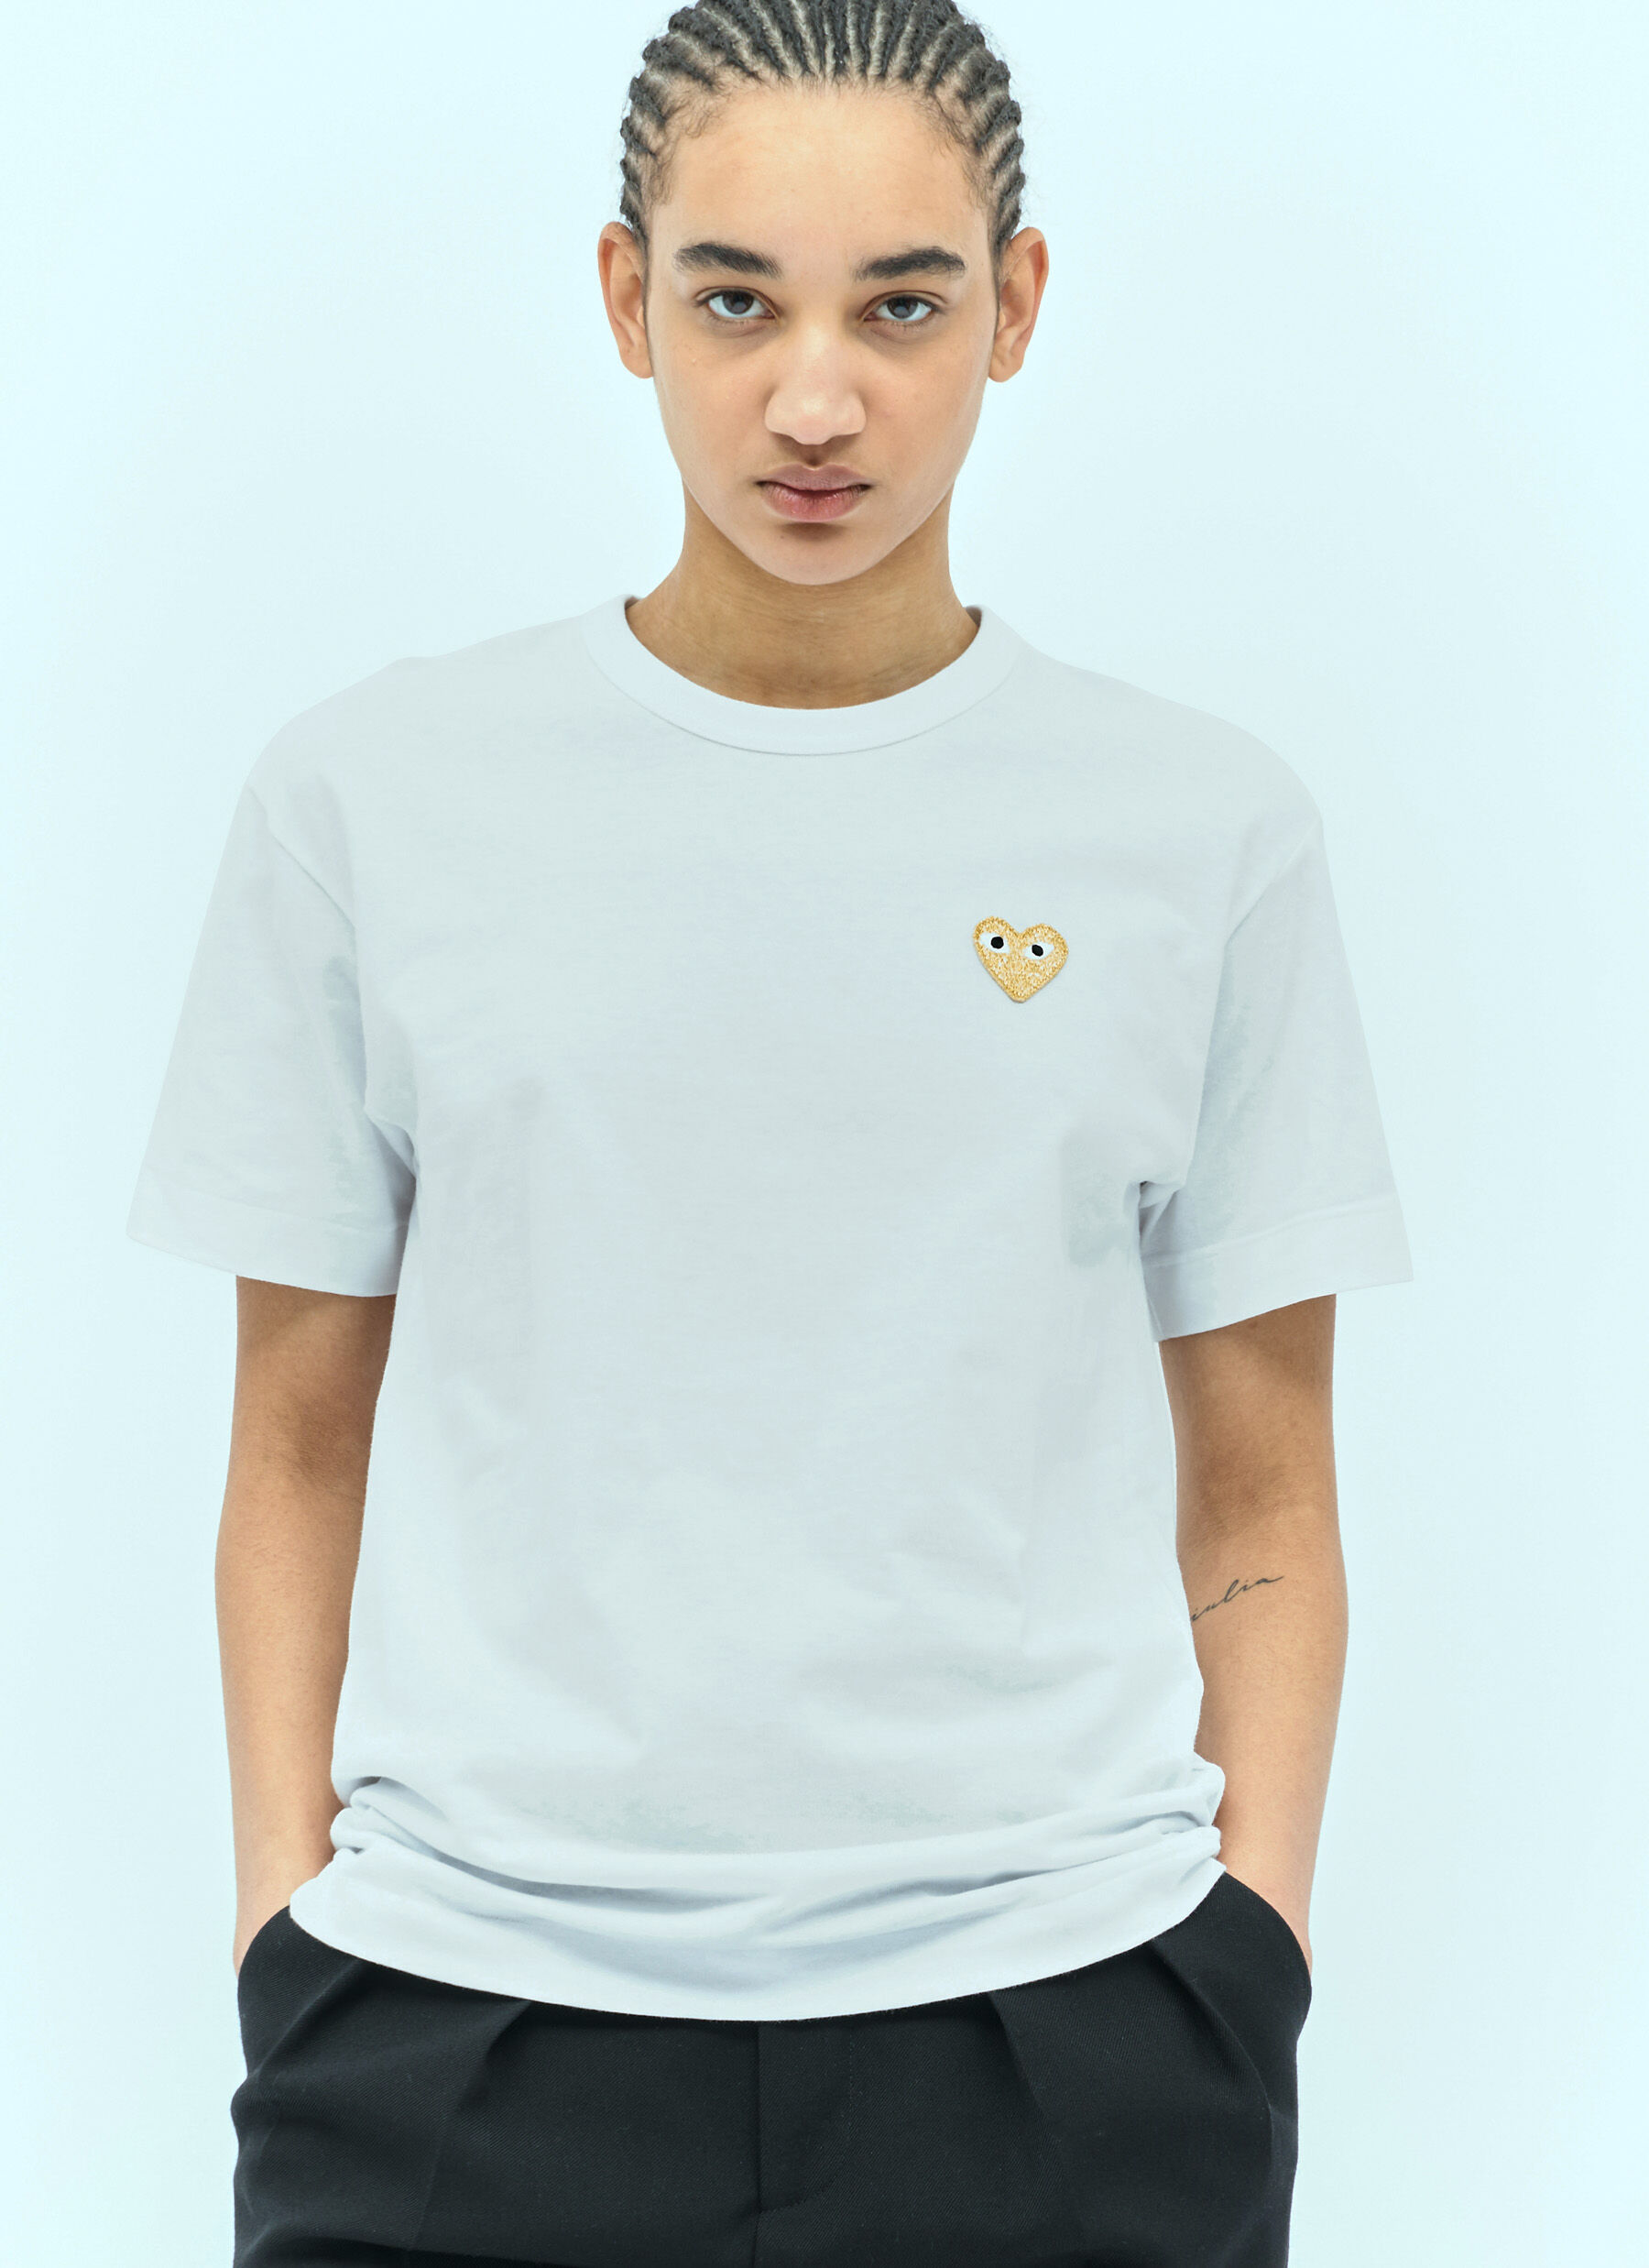 Jean Paul Gaultier Logo Patch T-Shirt White jpg0256013